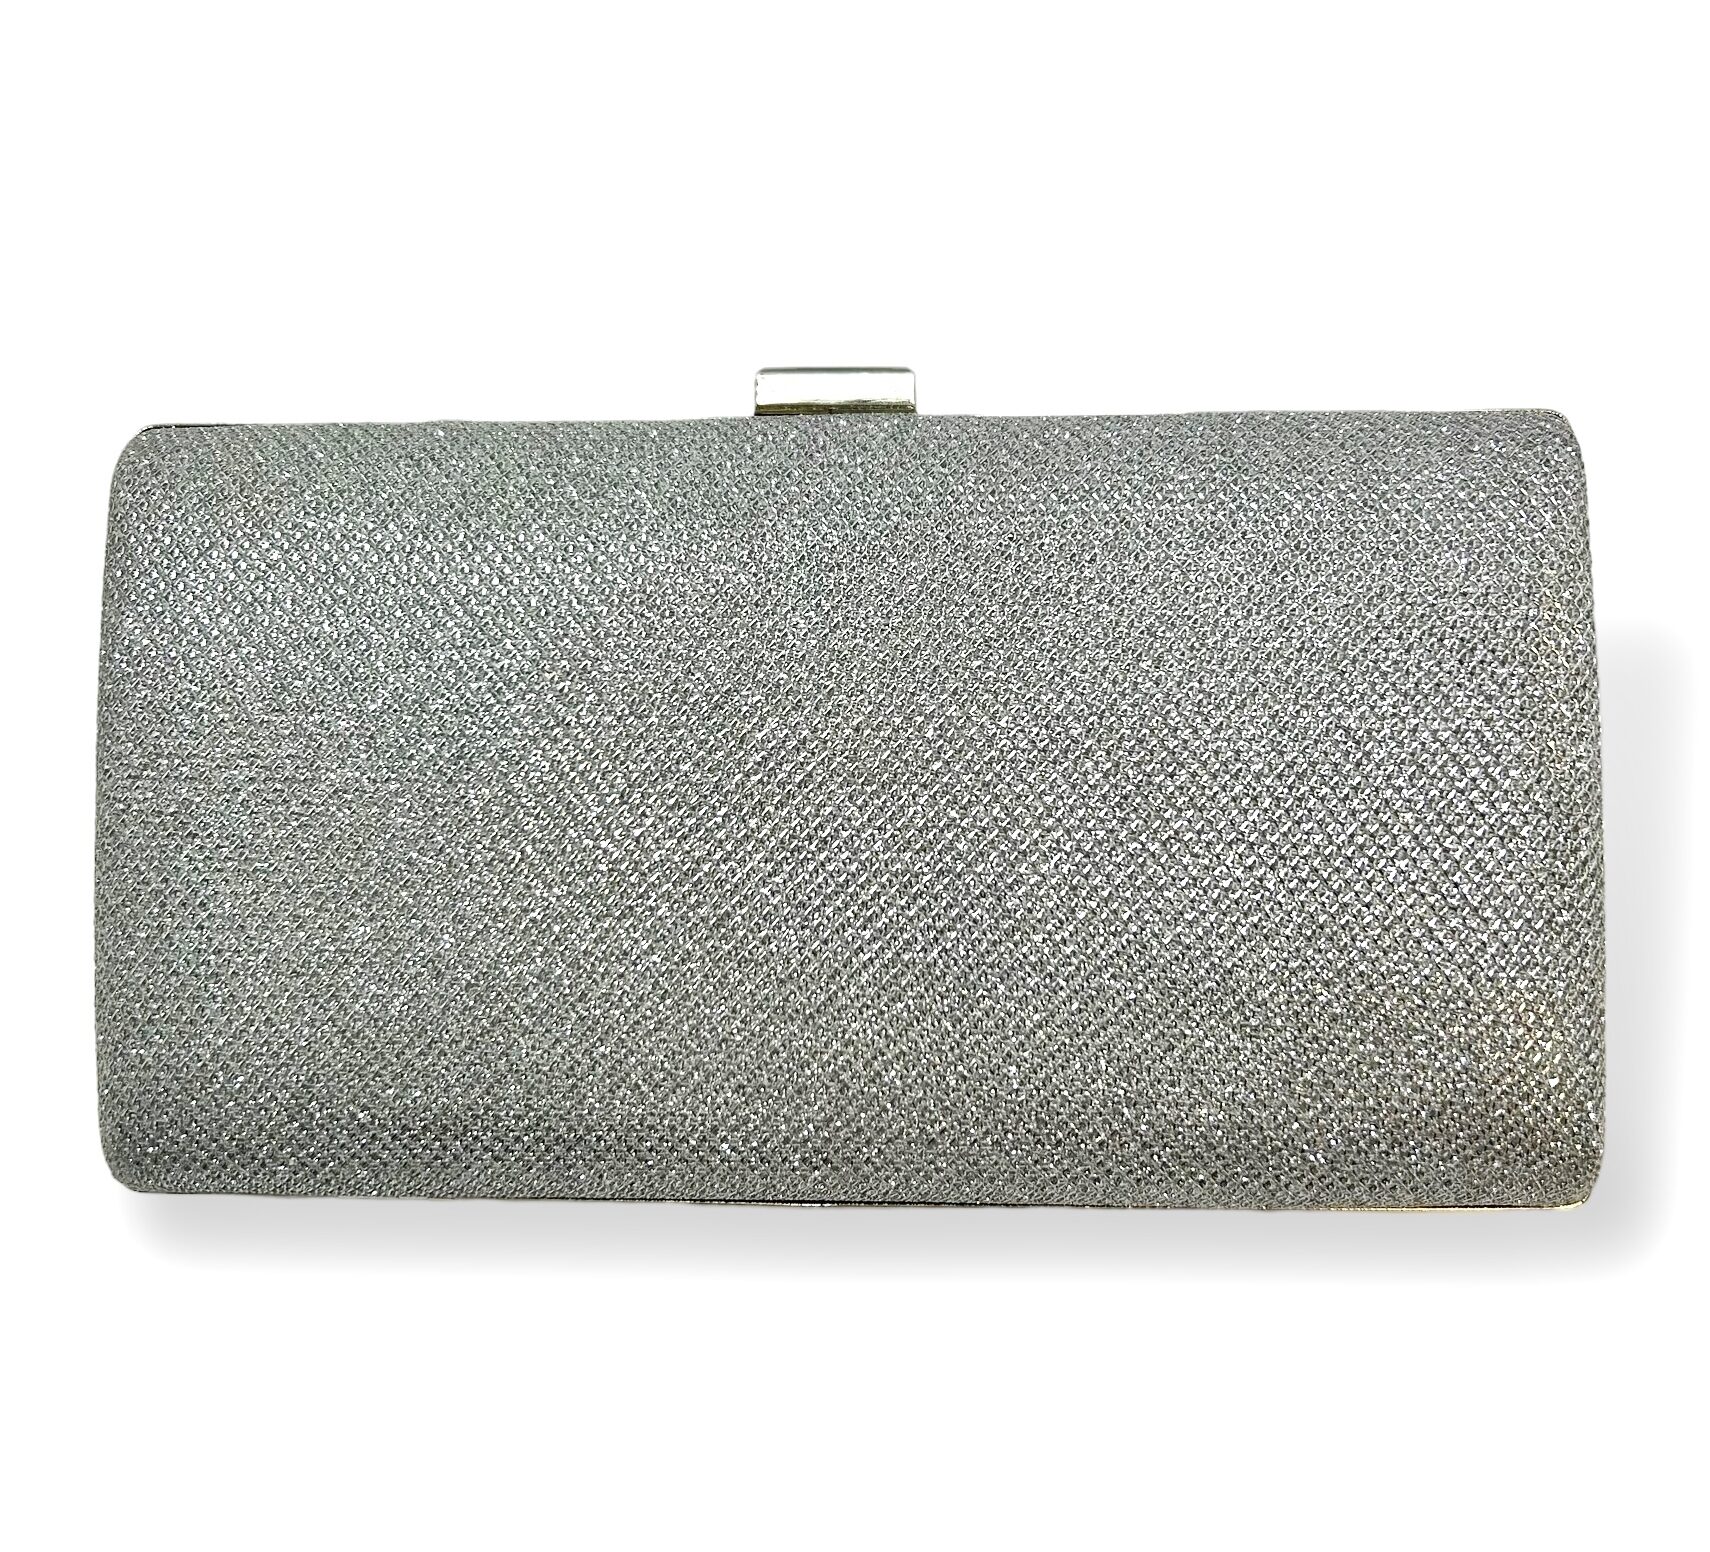 Large Silver Clutch Bag|Fia|Jeanette Maree|Shop Online Now